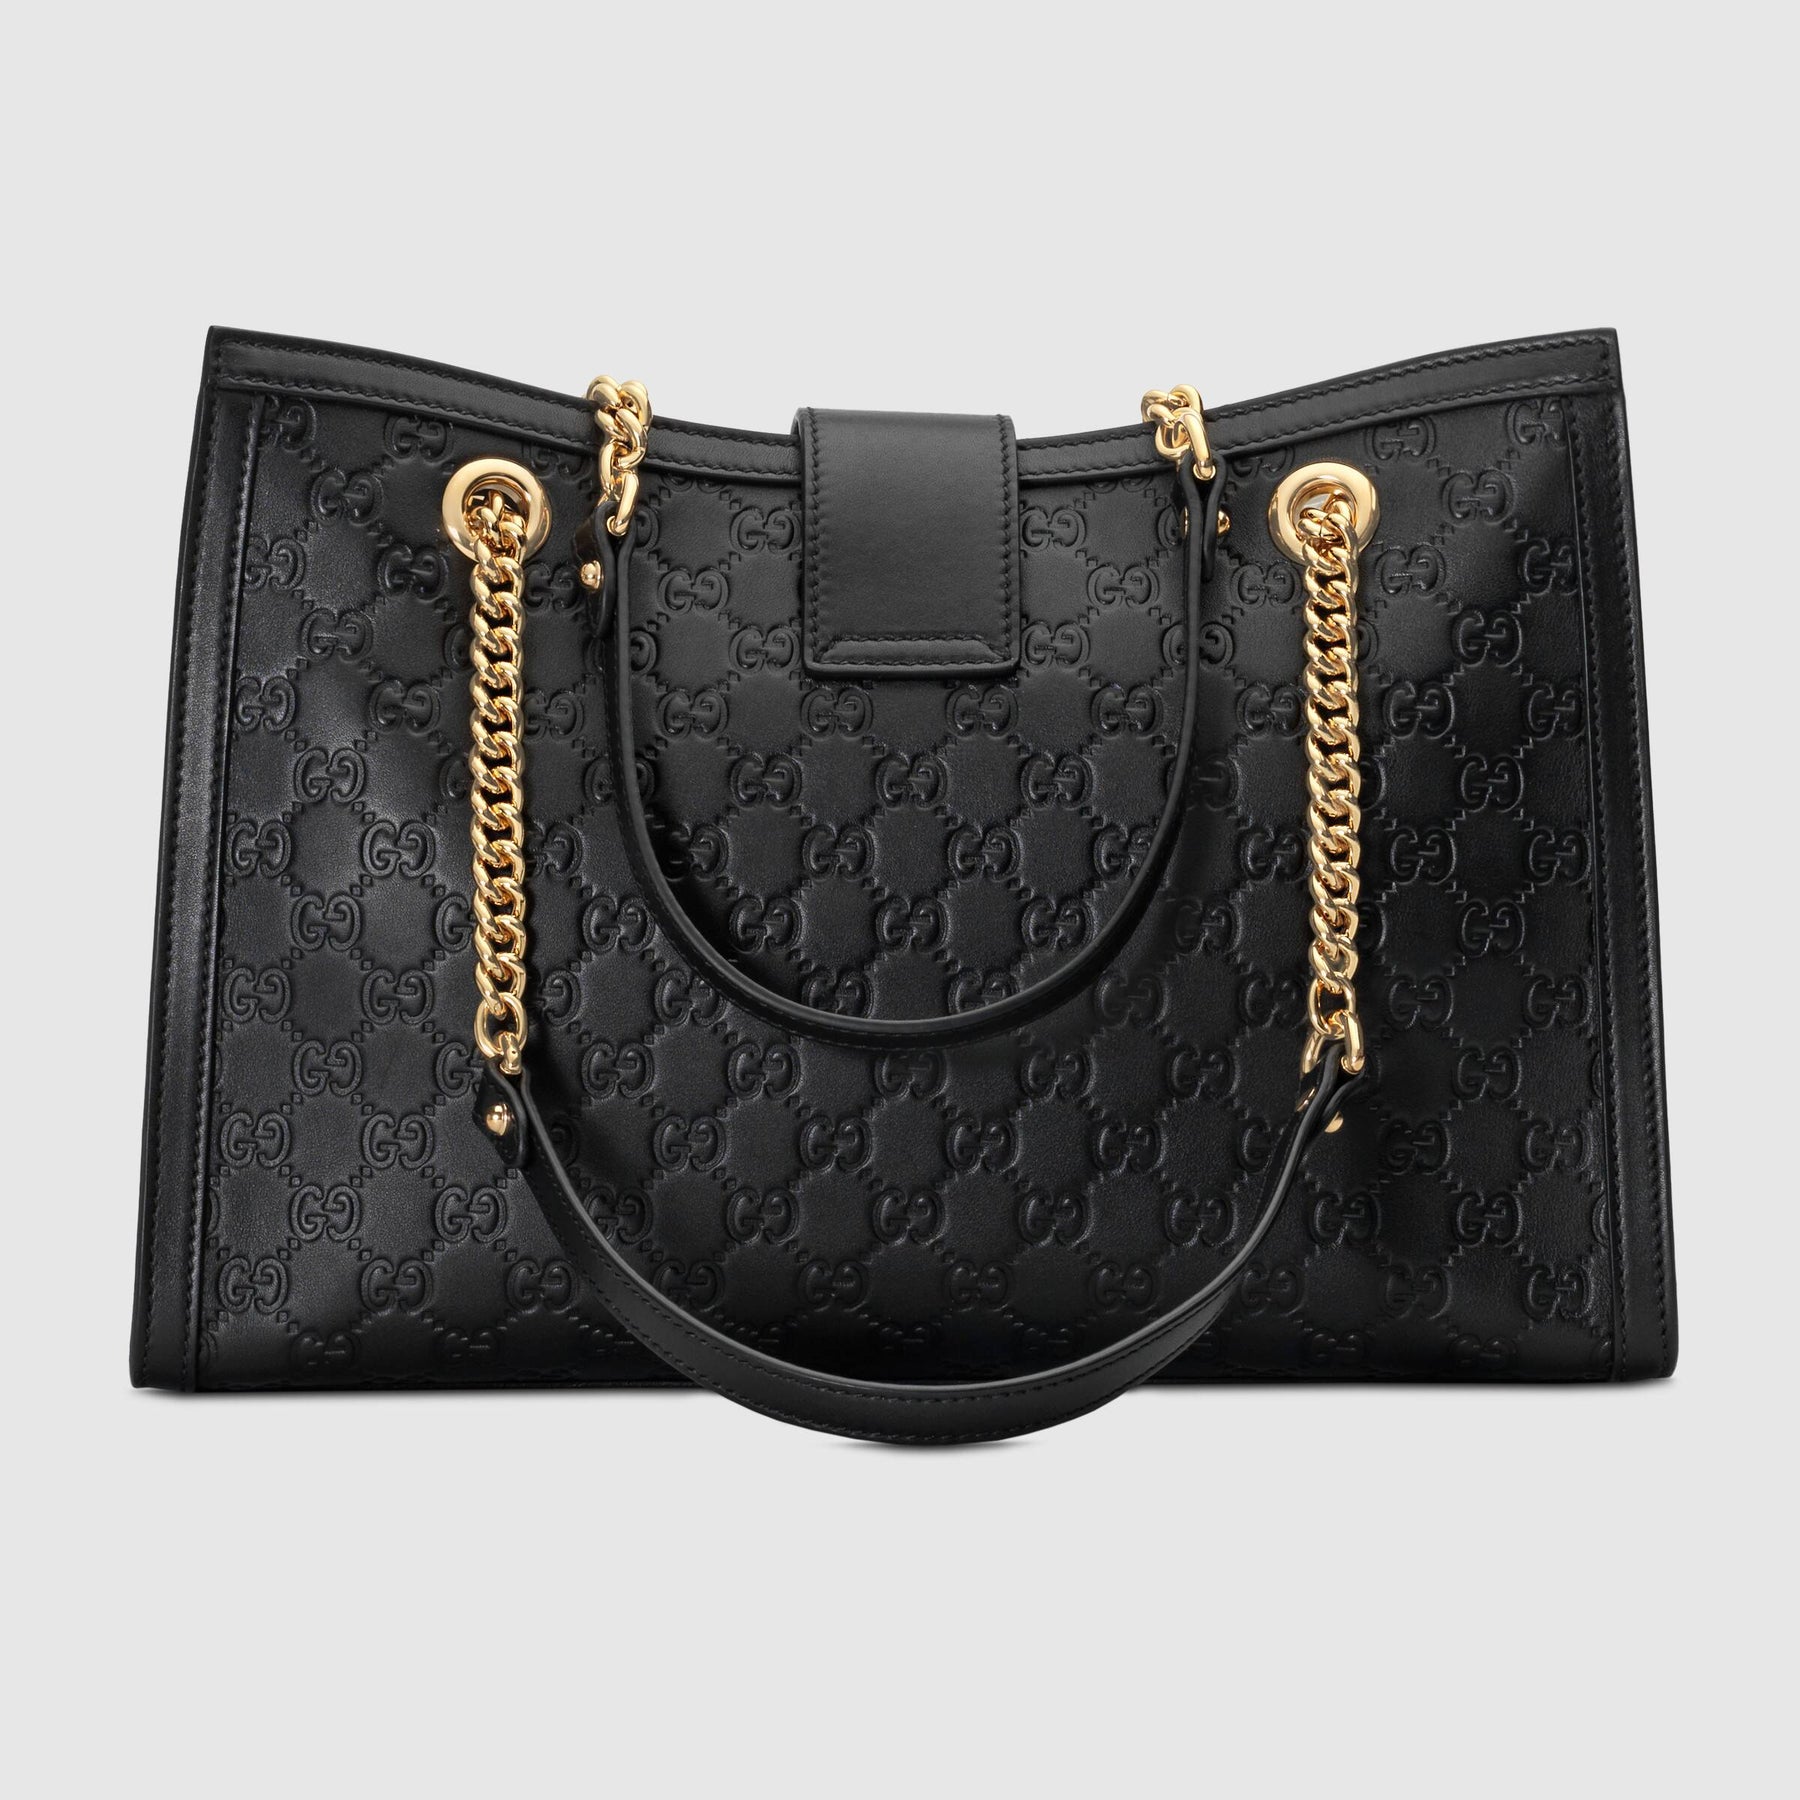  Gucci  Padlock  Signature Medium  Soft Leather Shoulder Bag 